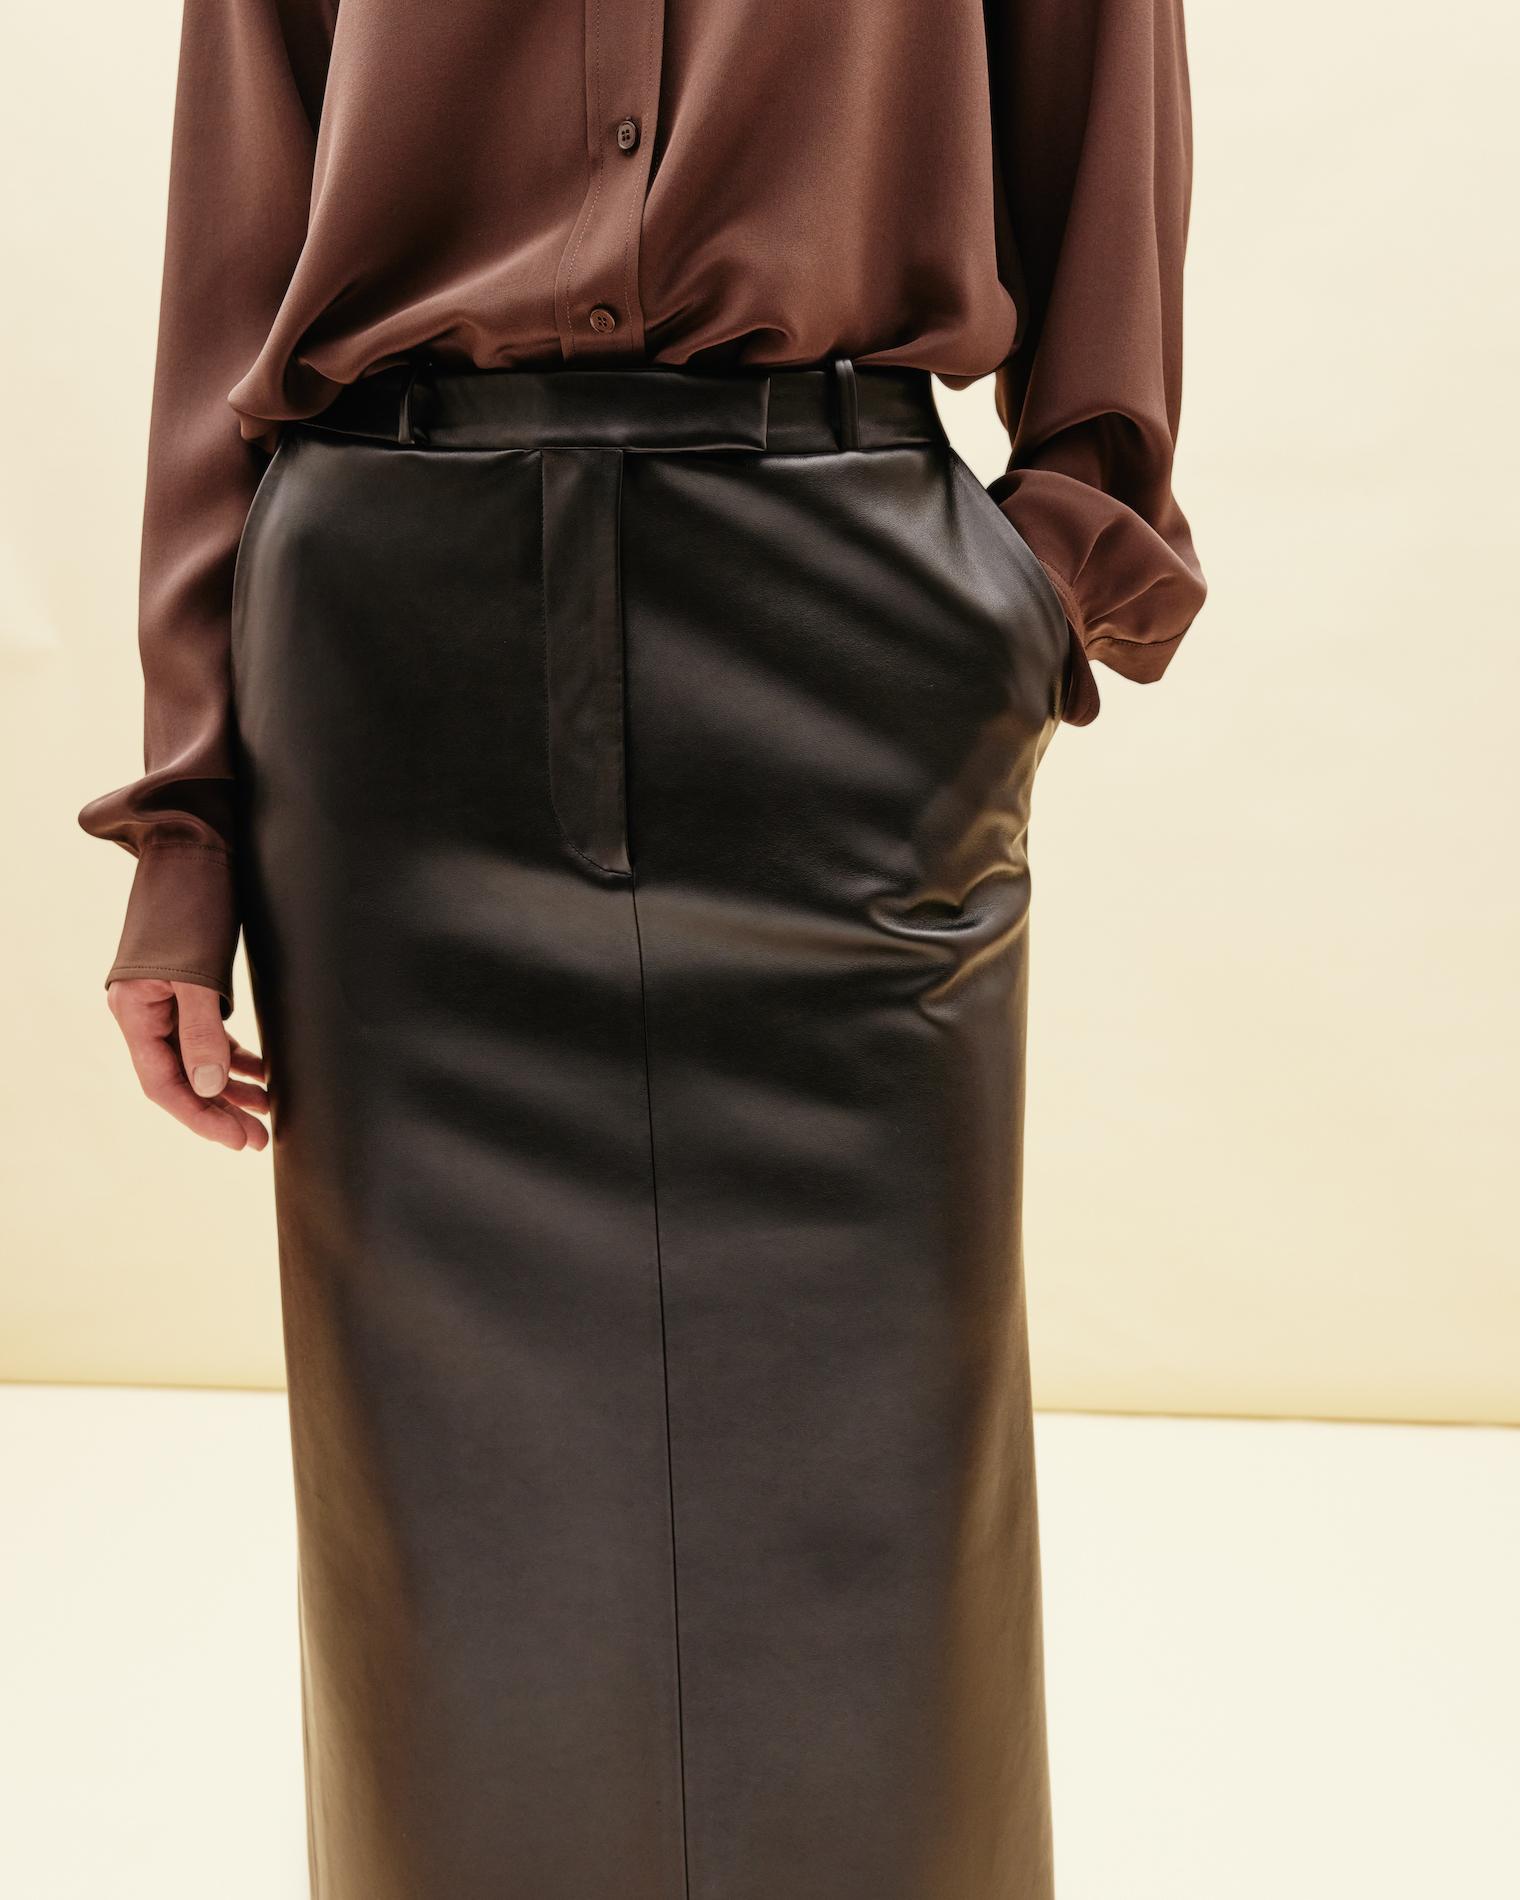 Vegan leather skirt